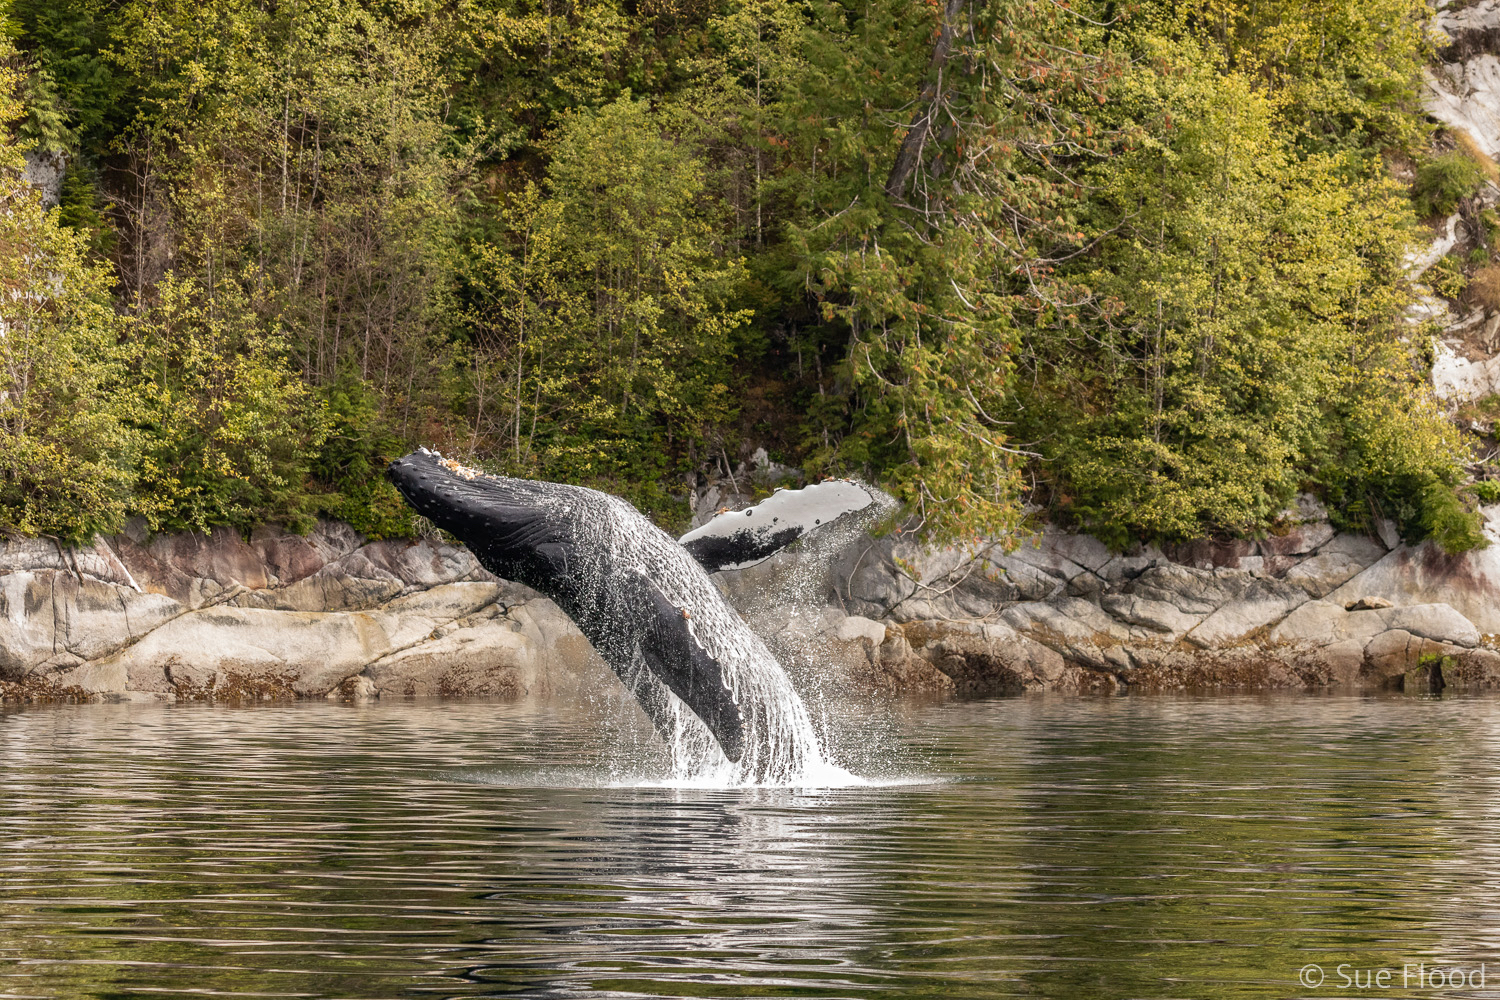 Breaching humpback, Great Bear Rainforest, British Columbia, Canada.